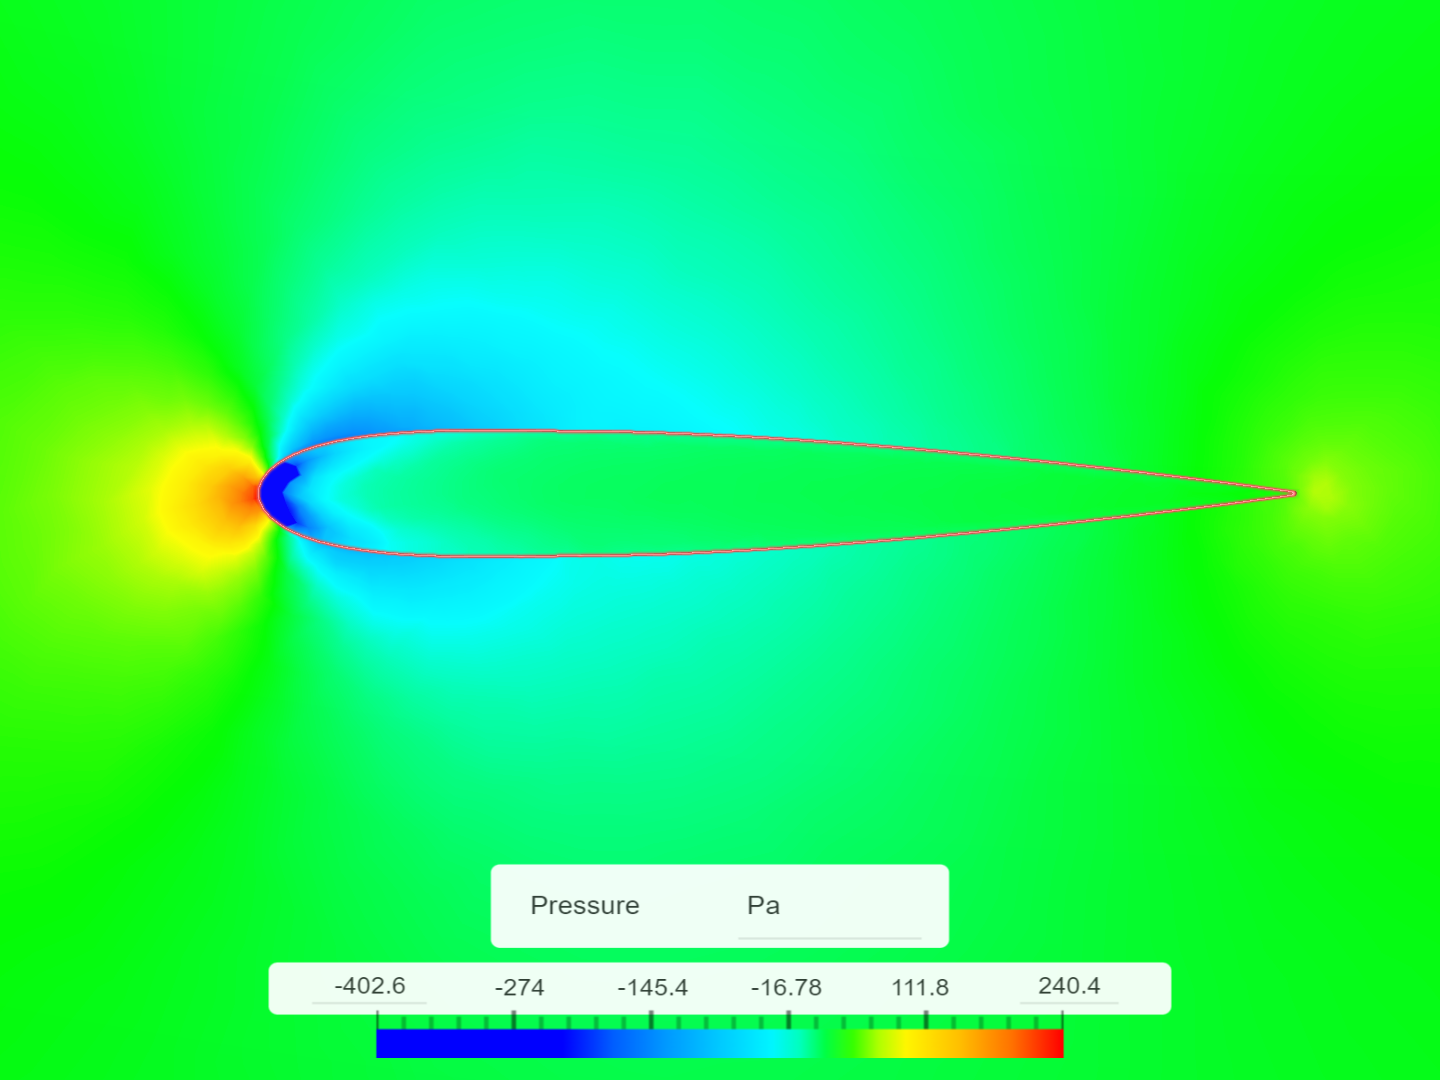 flow simulation 2 image